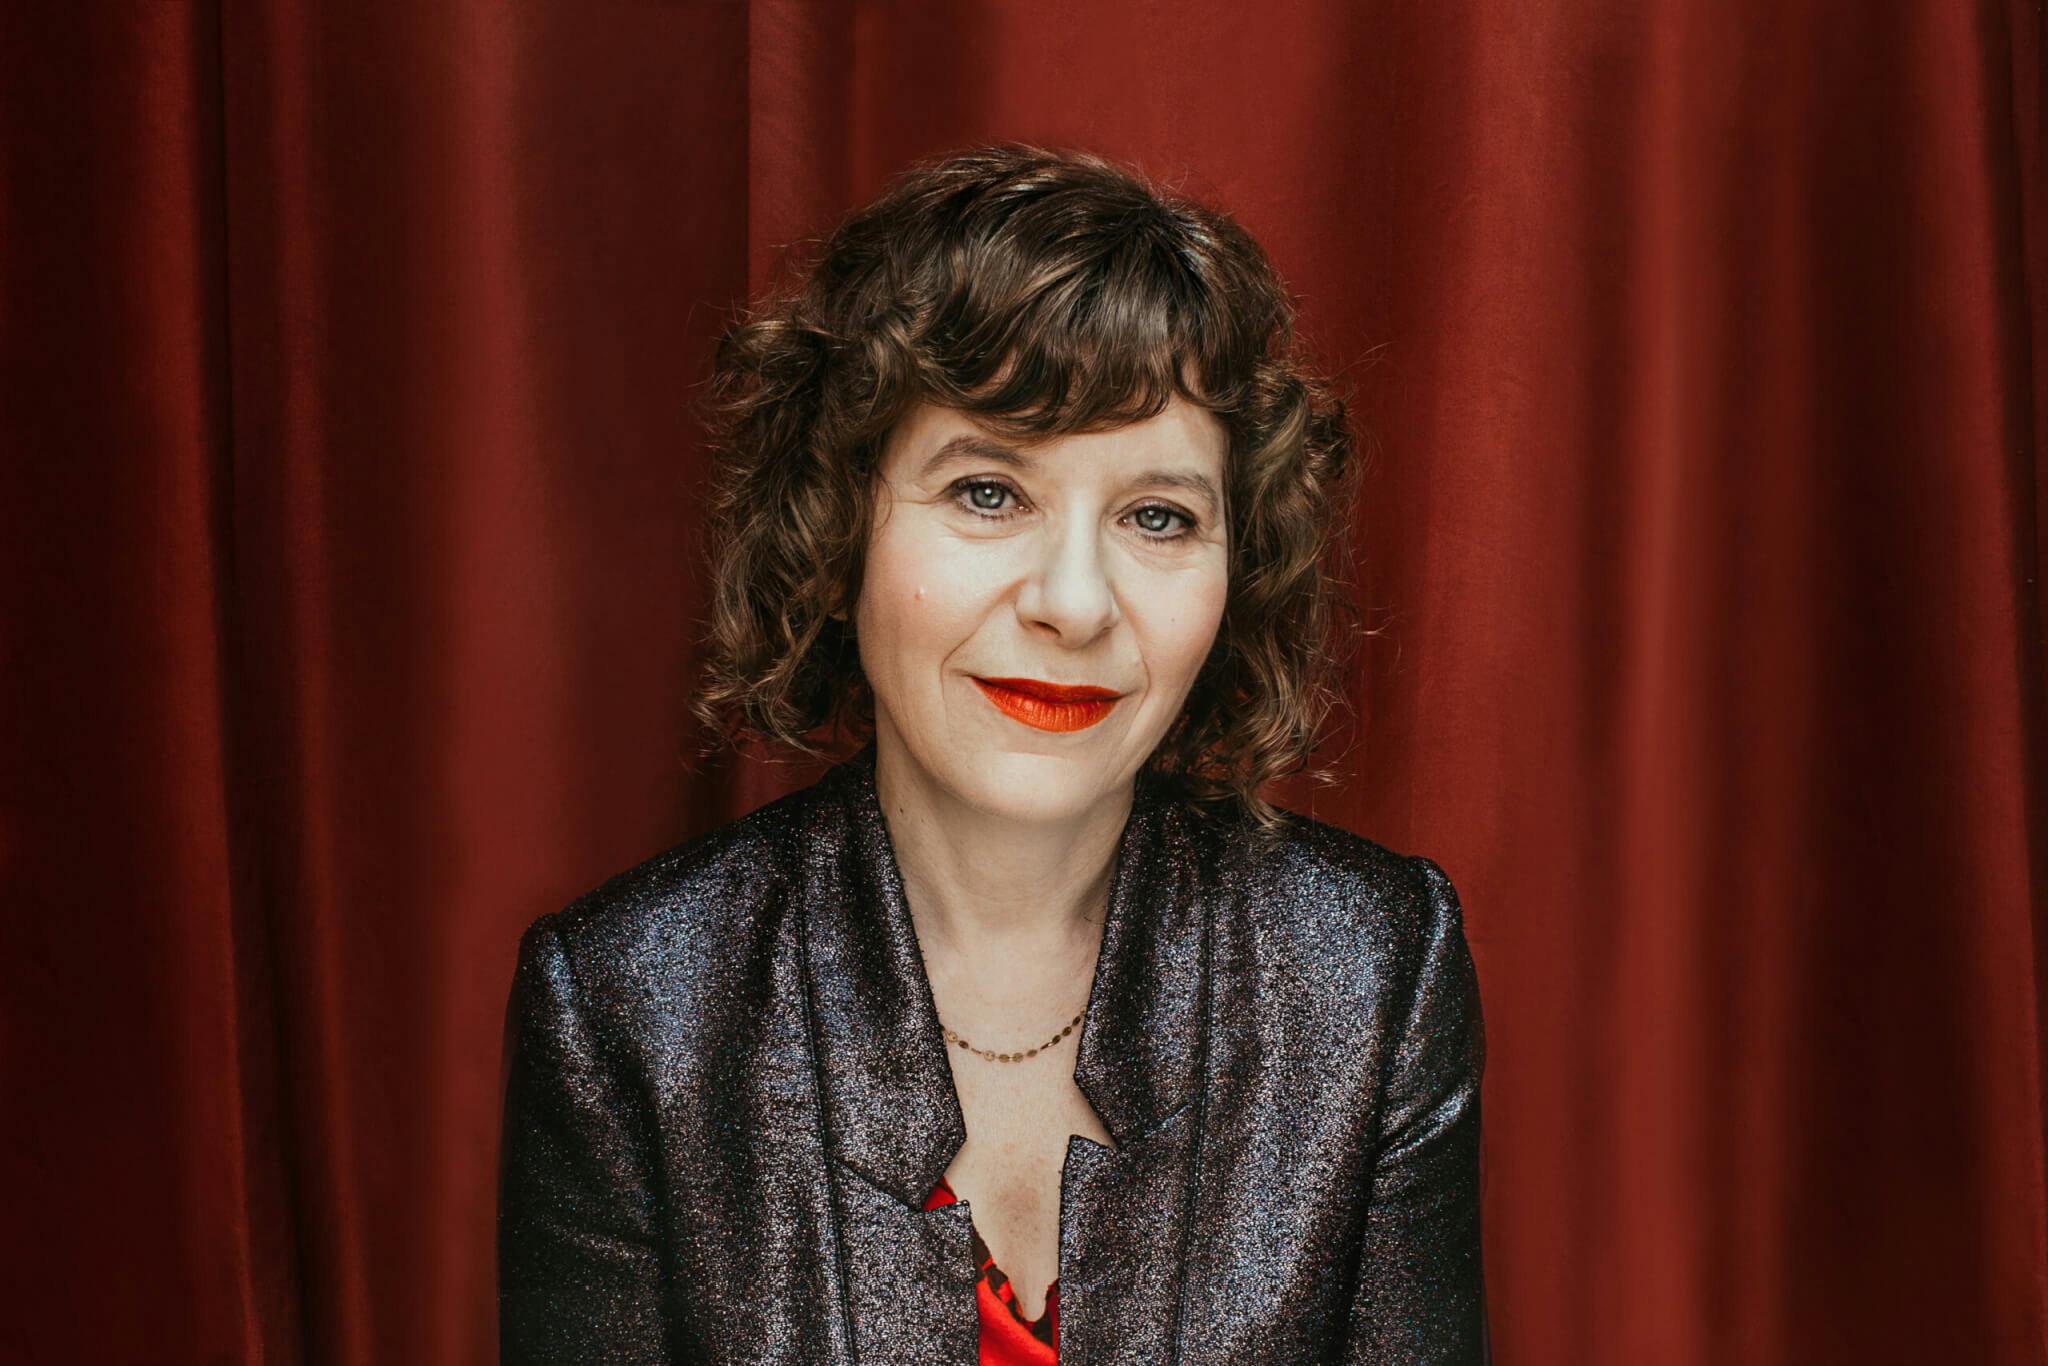 A portrait of Elisabeth Subrin, set against a red curtain.